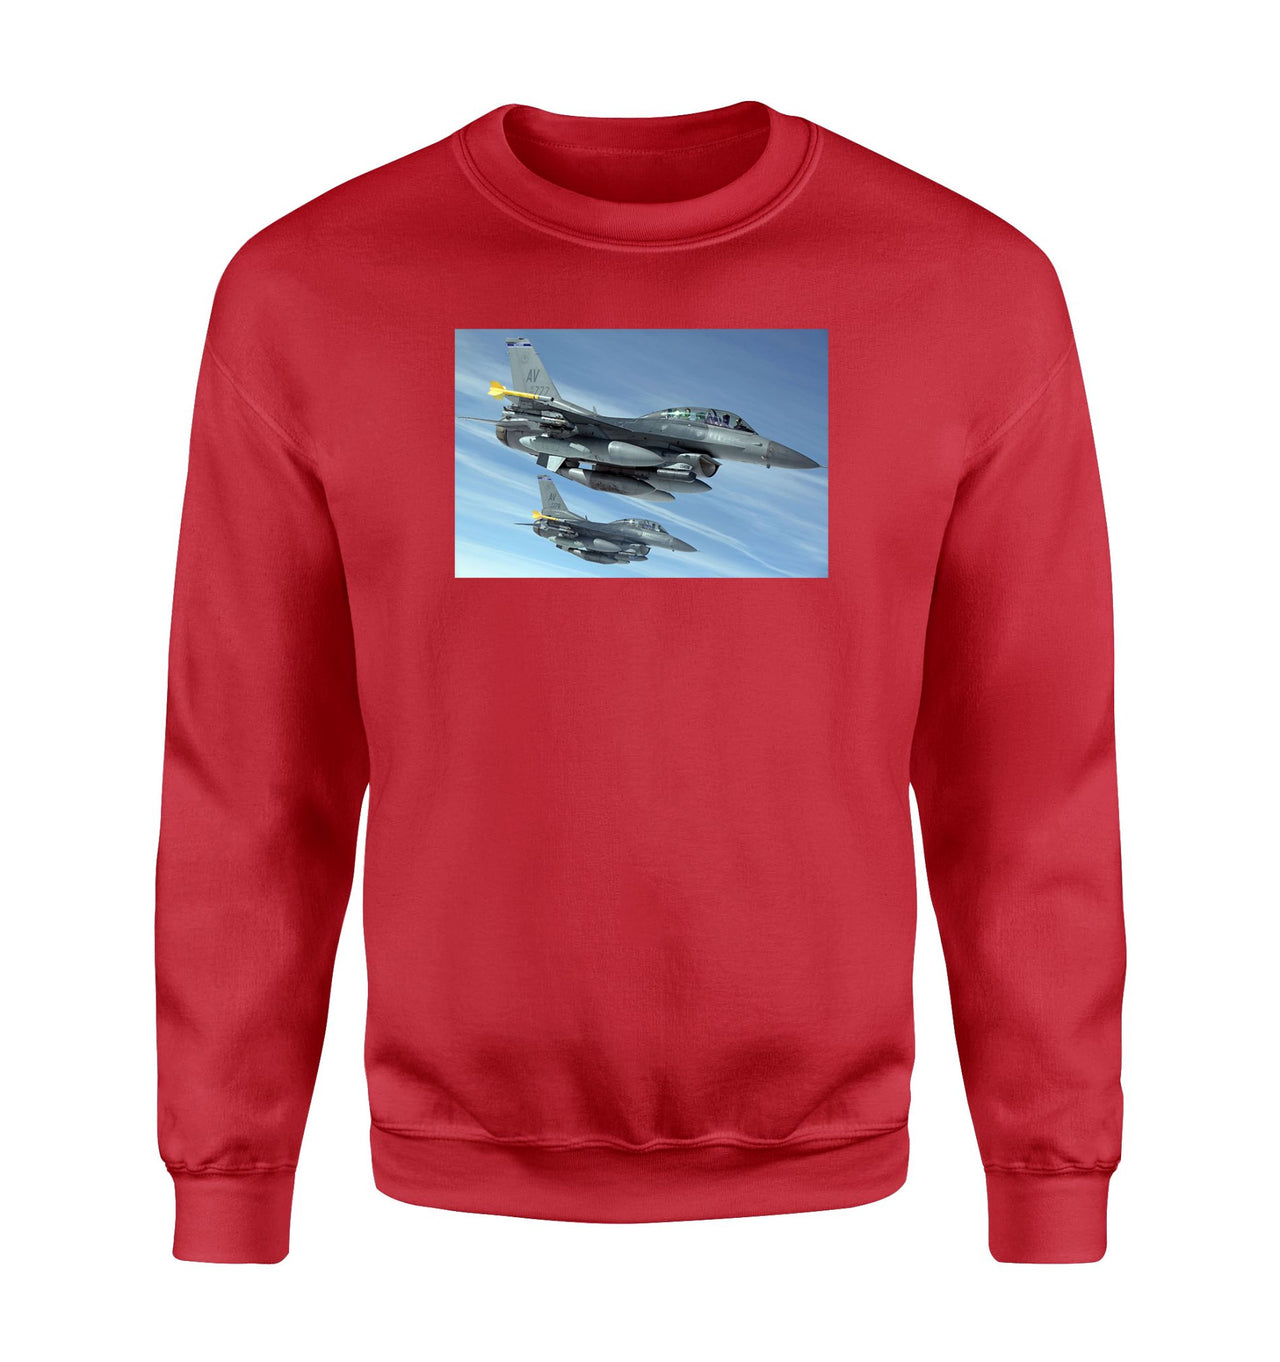 Two Fighting Falcon Designed Sweatshirts